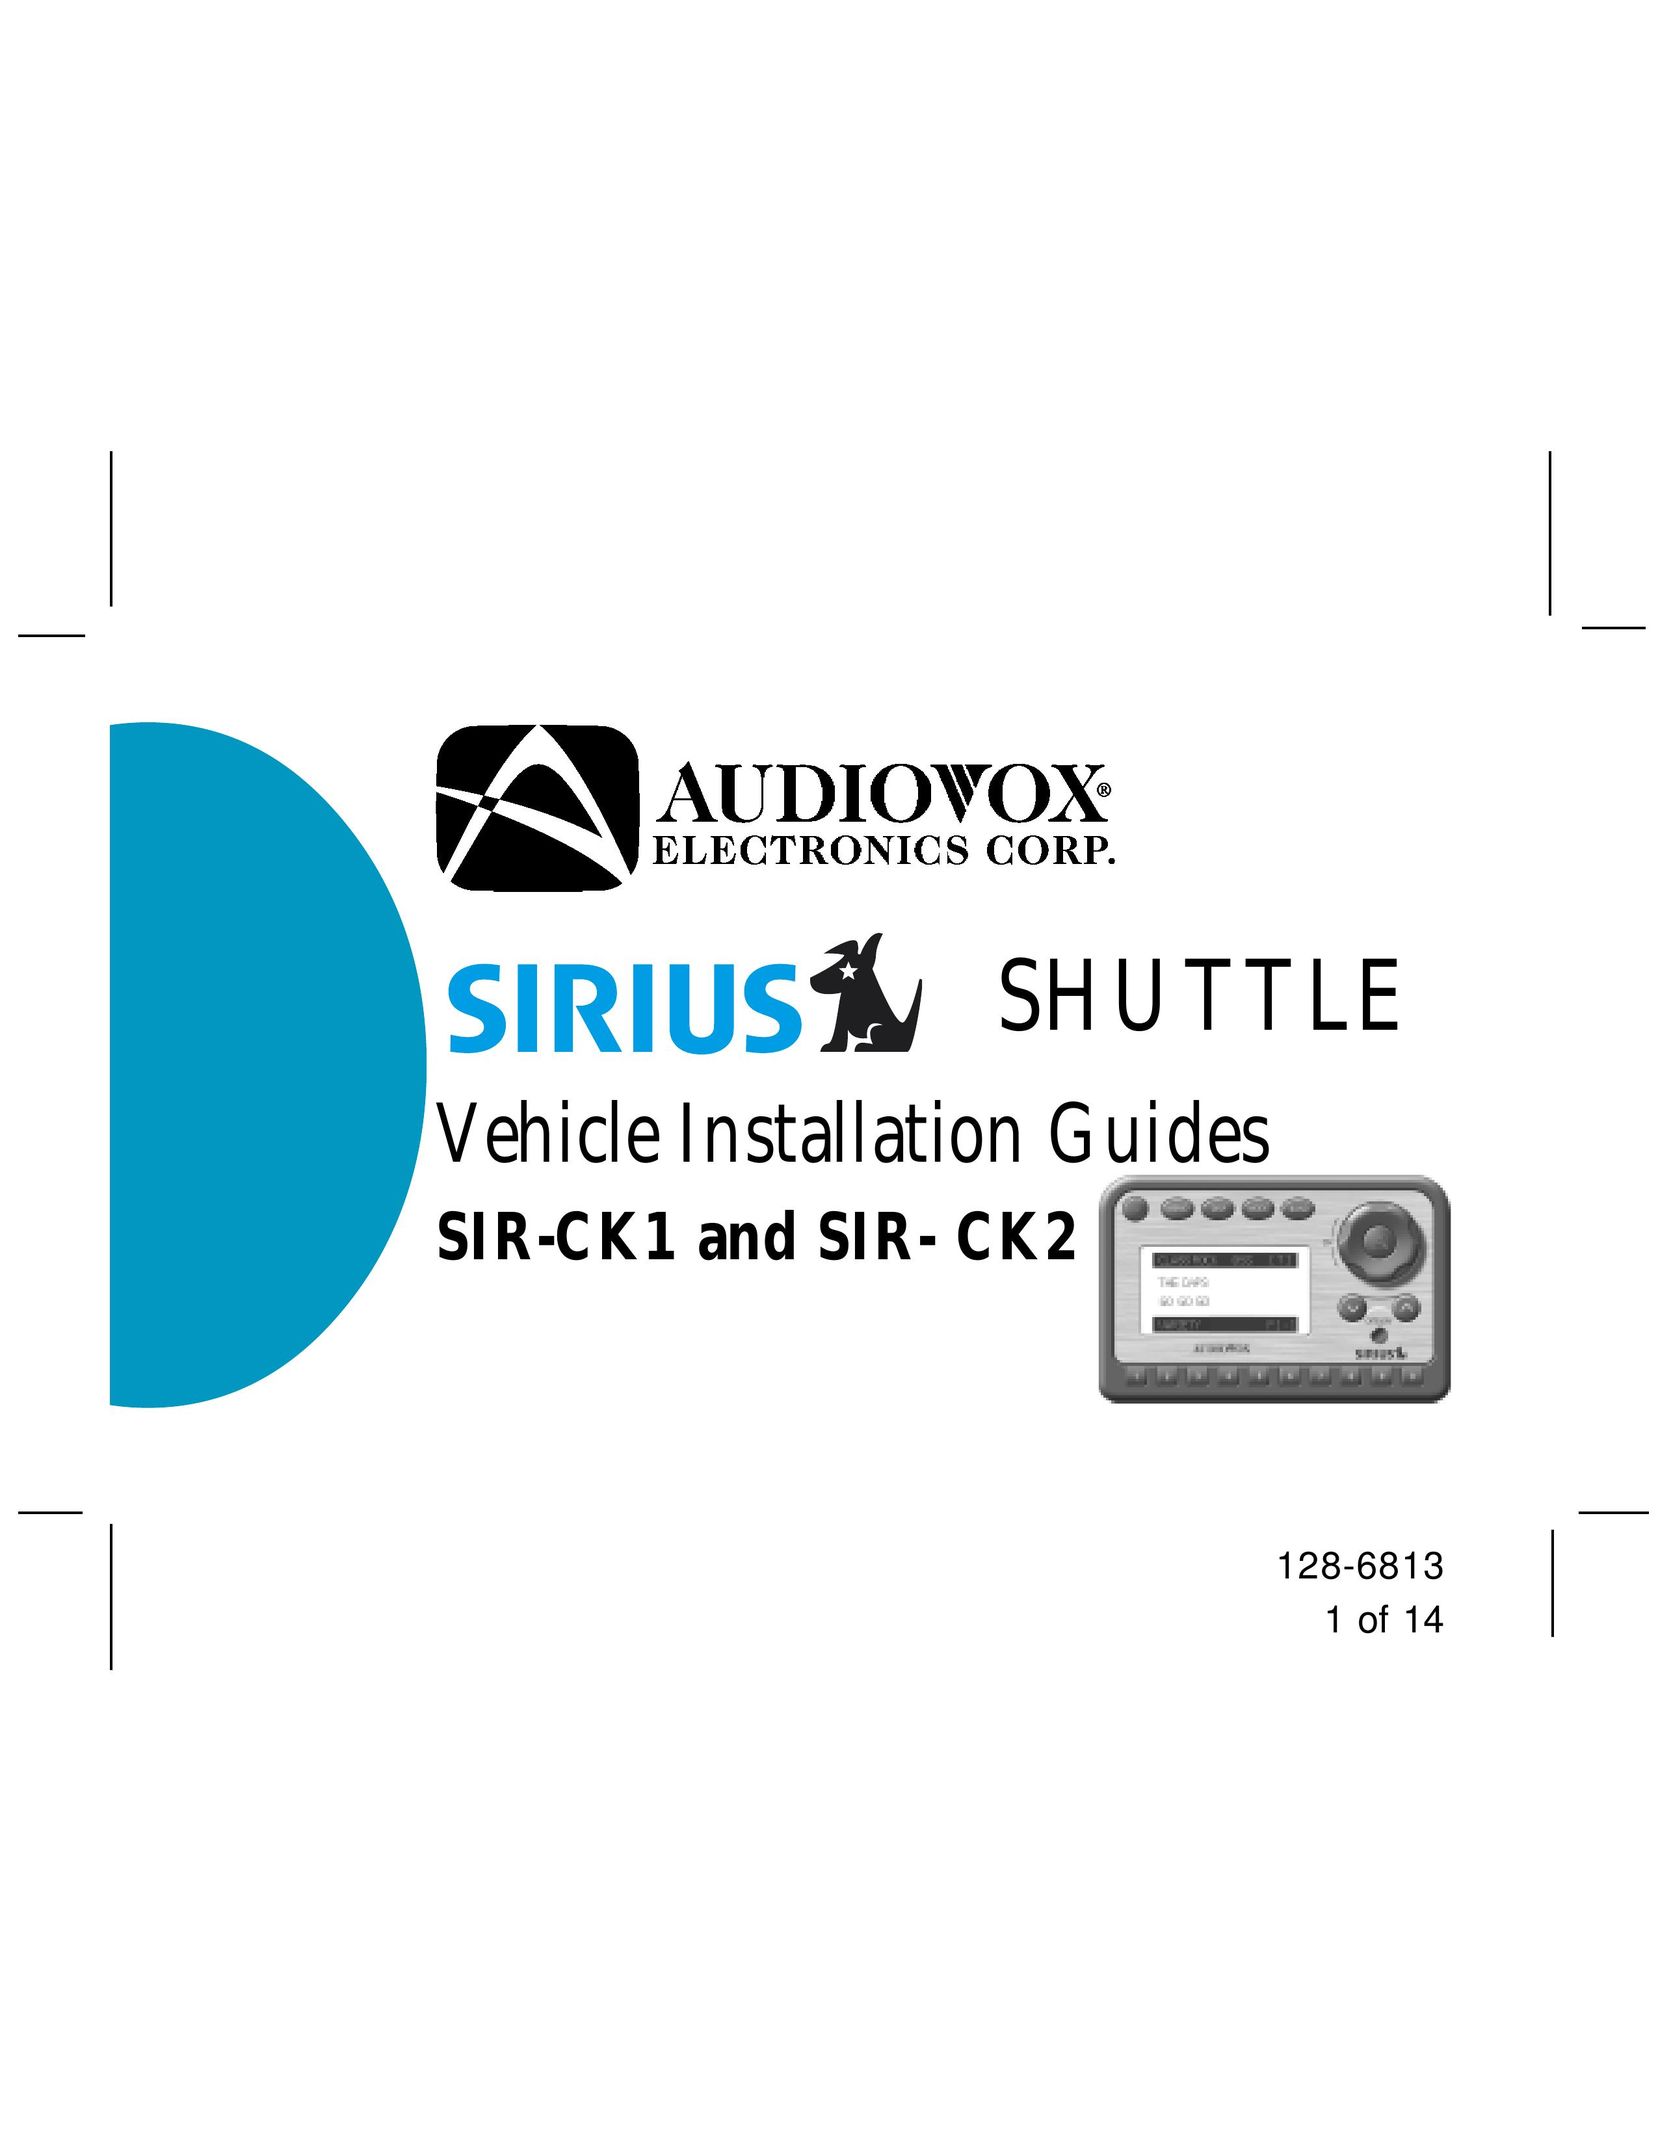 Audiovox SIR-CK1 Car Satellite Radio System User Manual